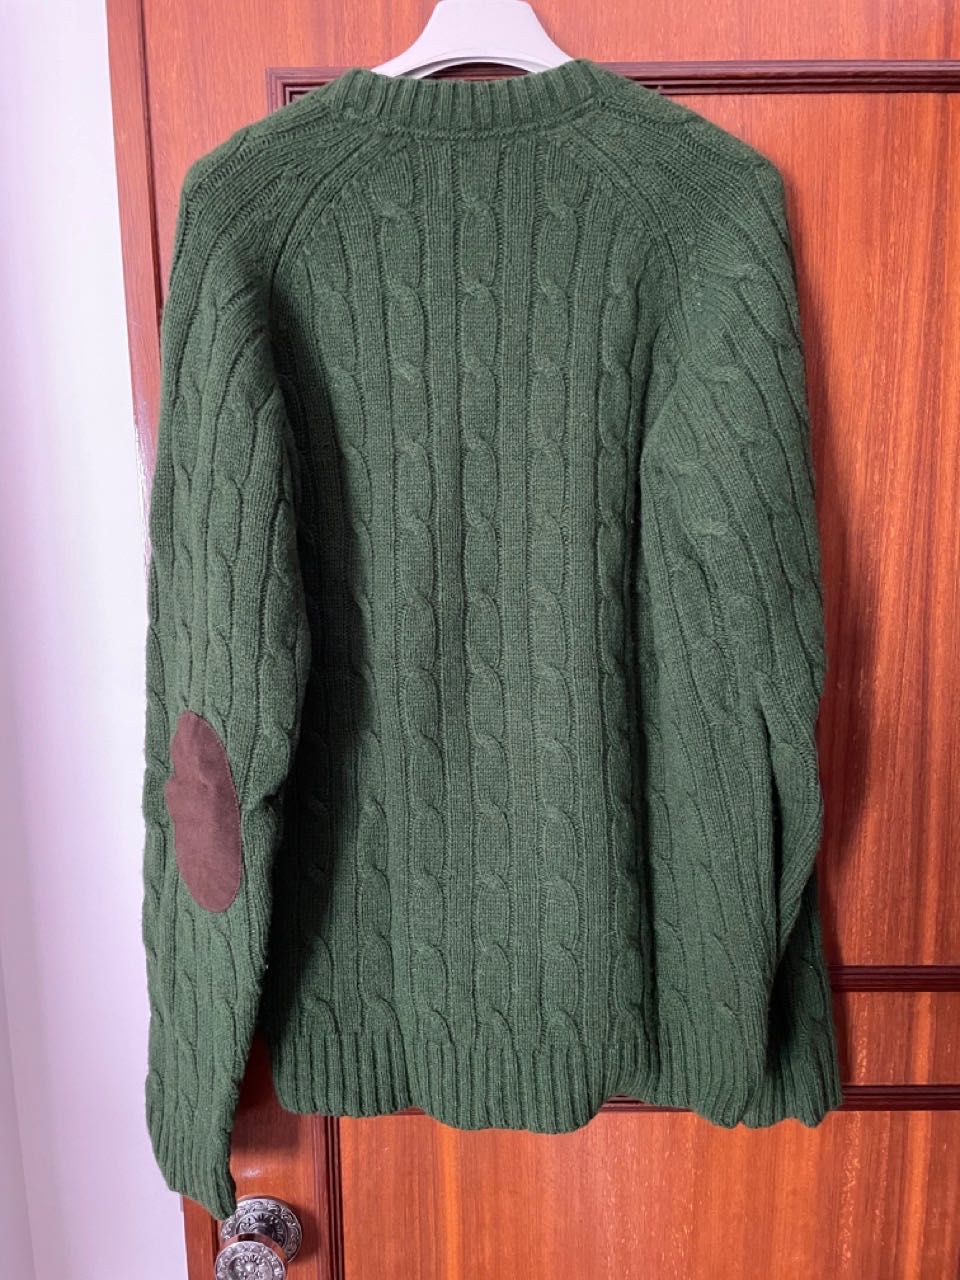 Sweater de malha, verde, da El Ganso, Tamanho S